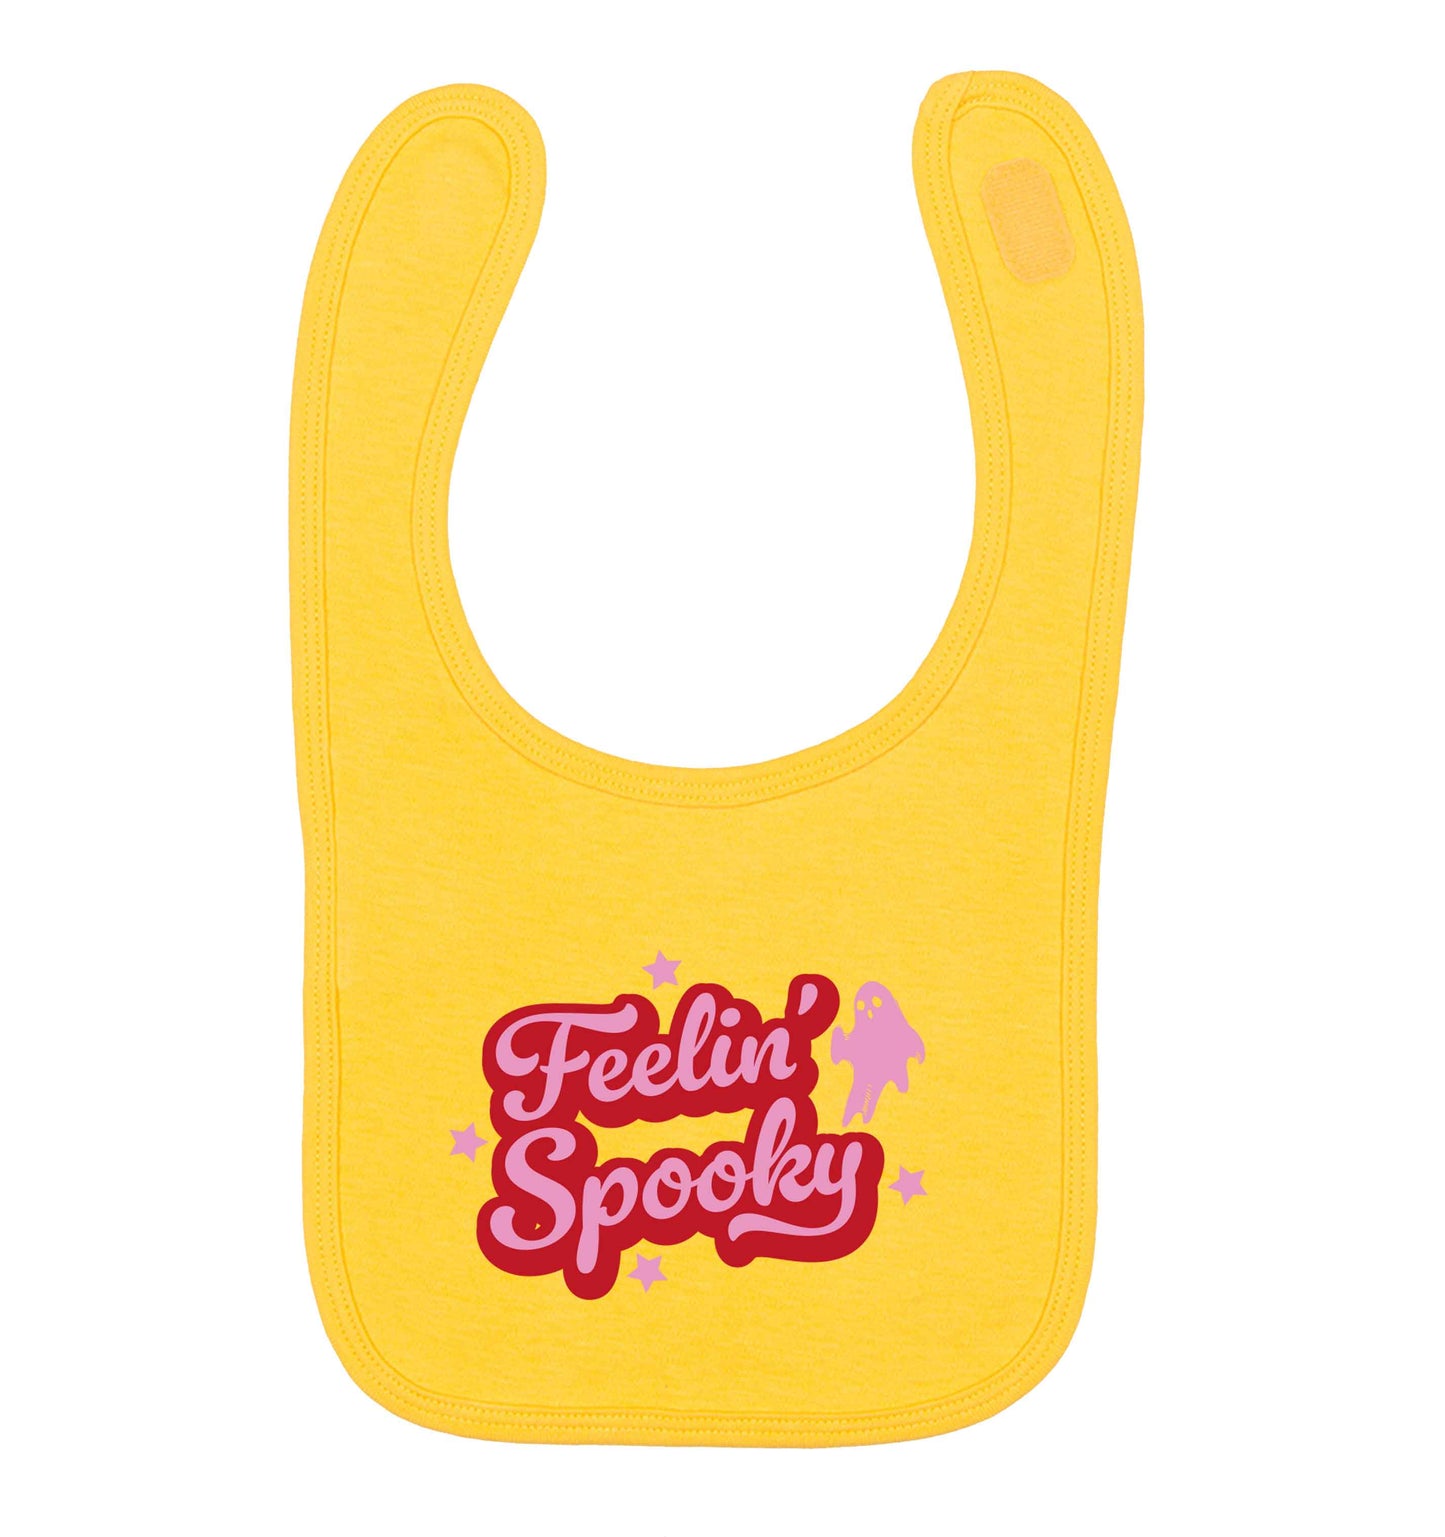 Feelin' Spooky Kit yellow baby bib